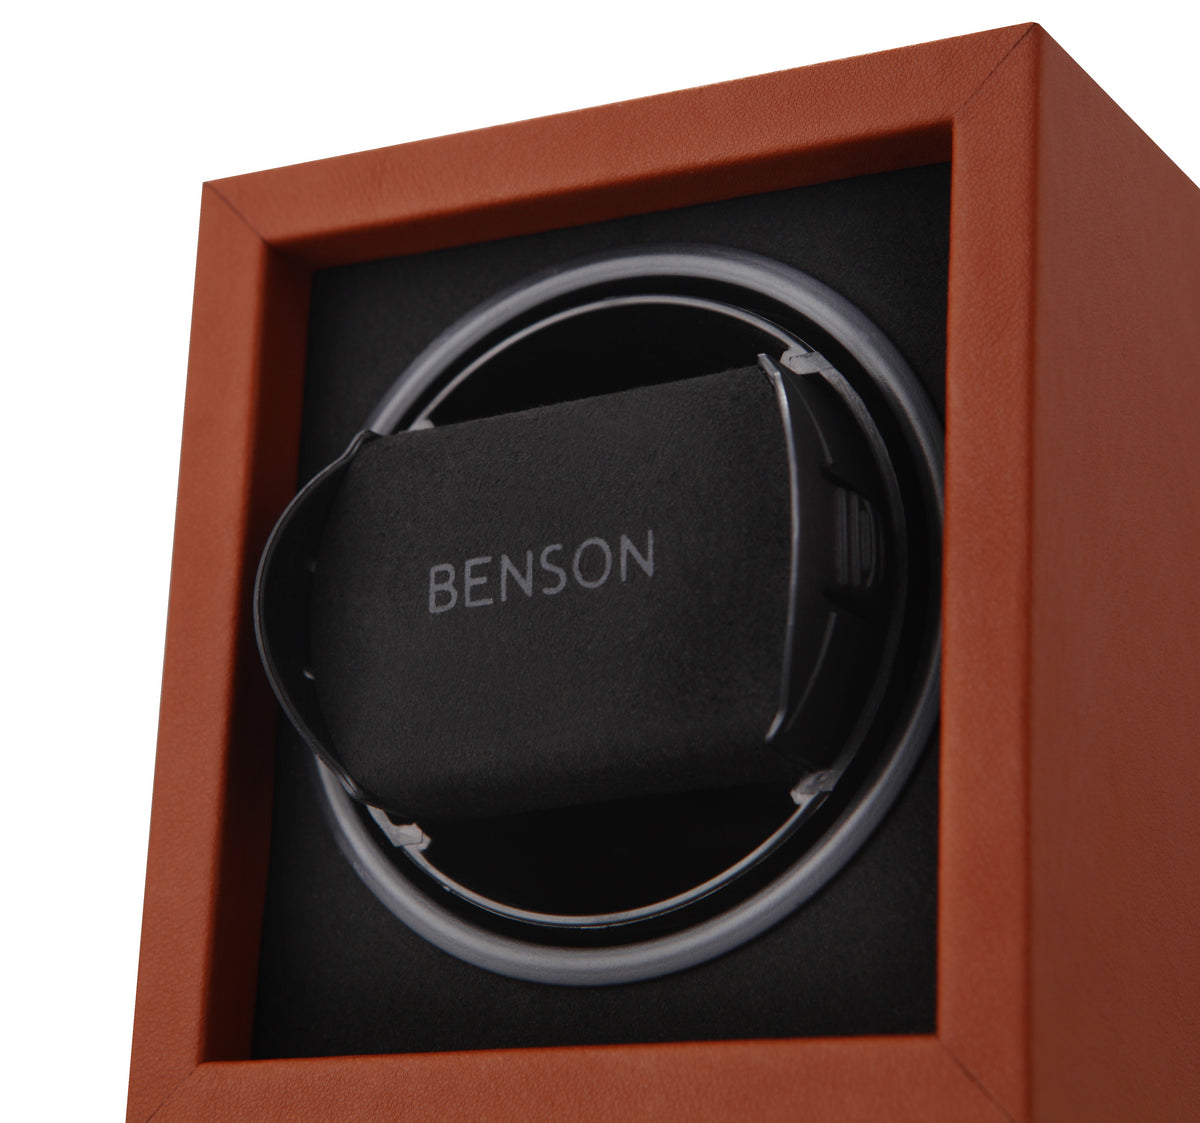 Benson Compact Series - Single Watch Winder in Light Brown